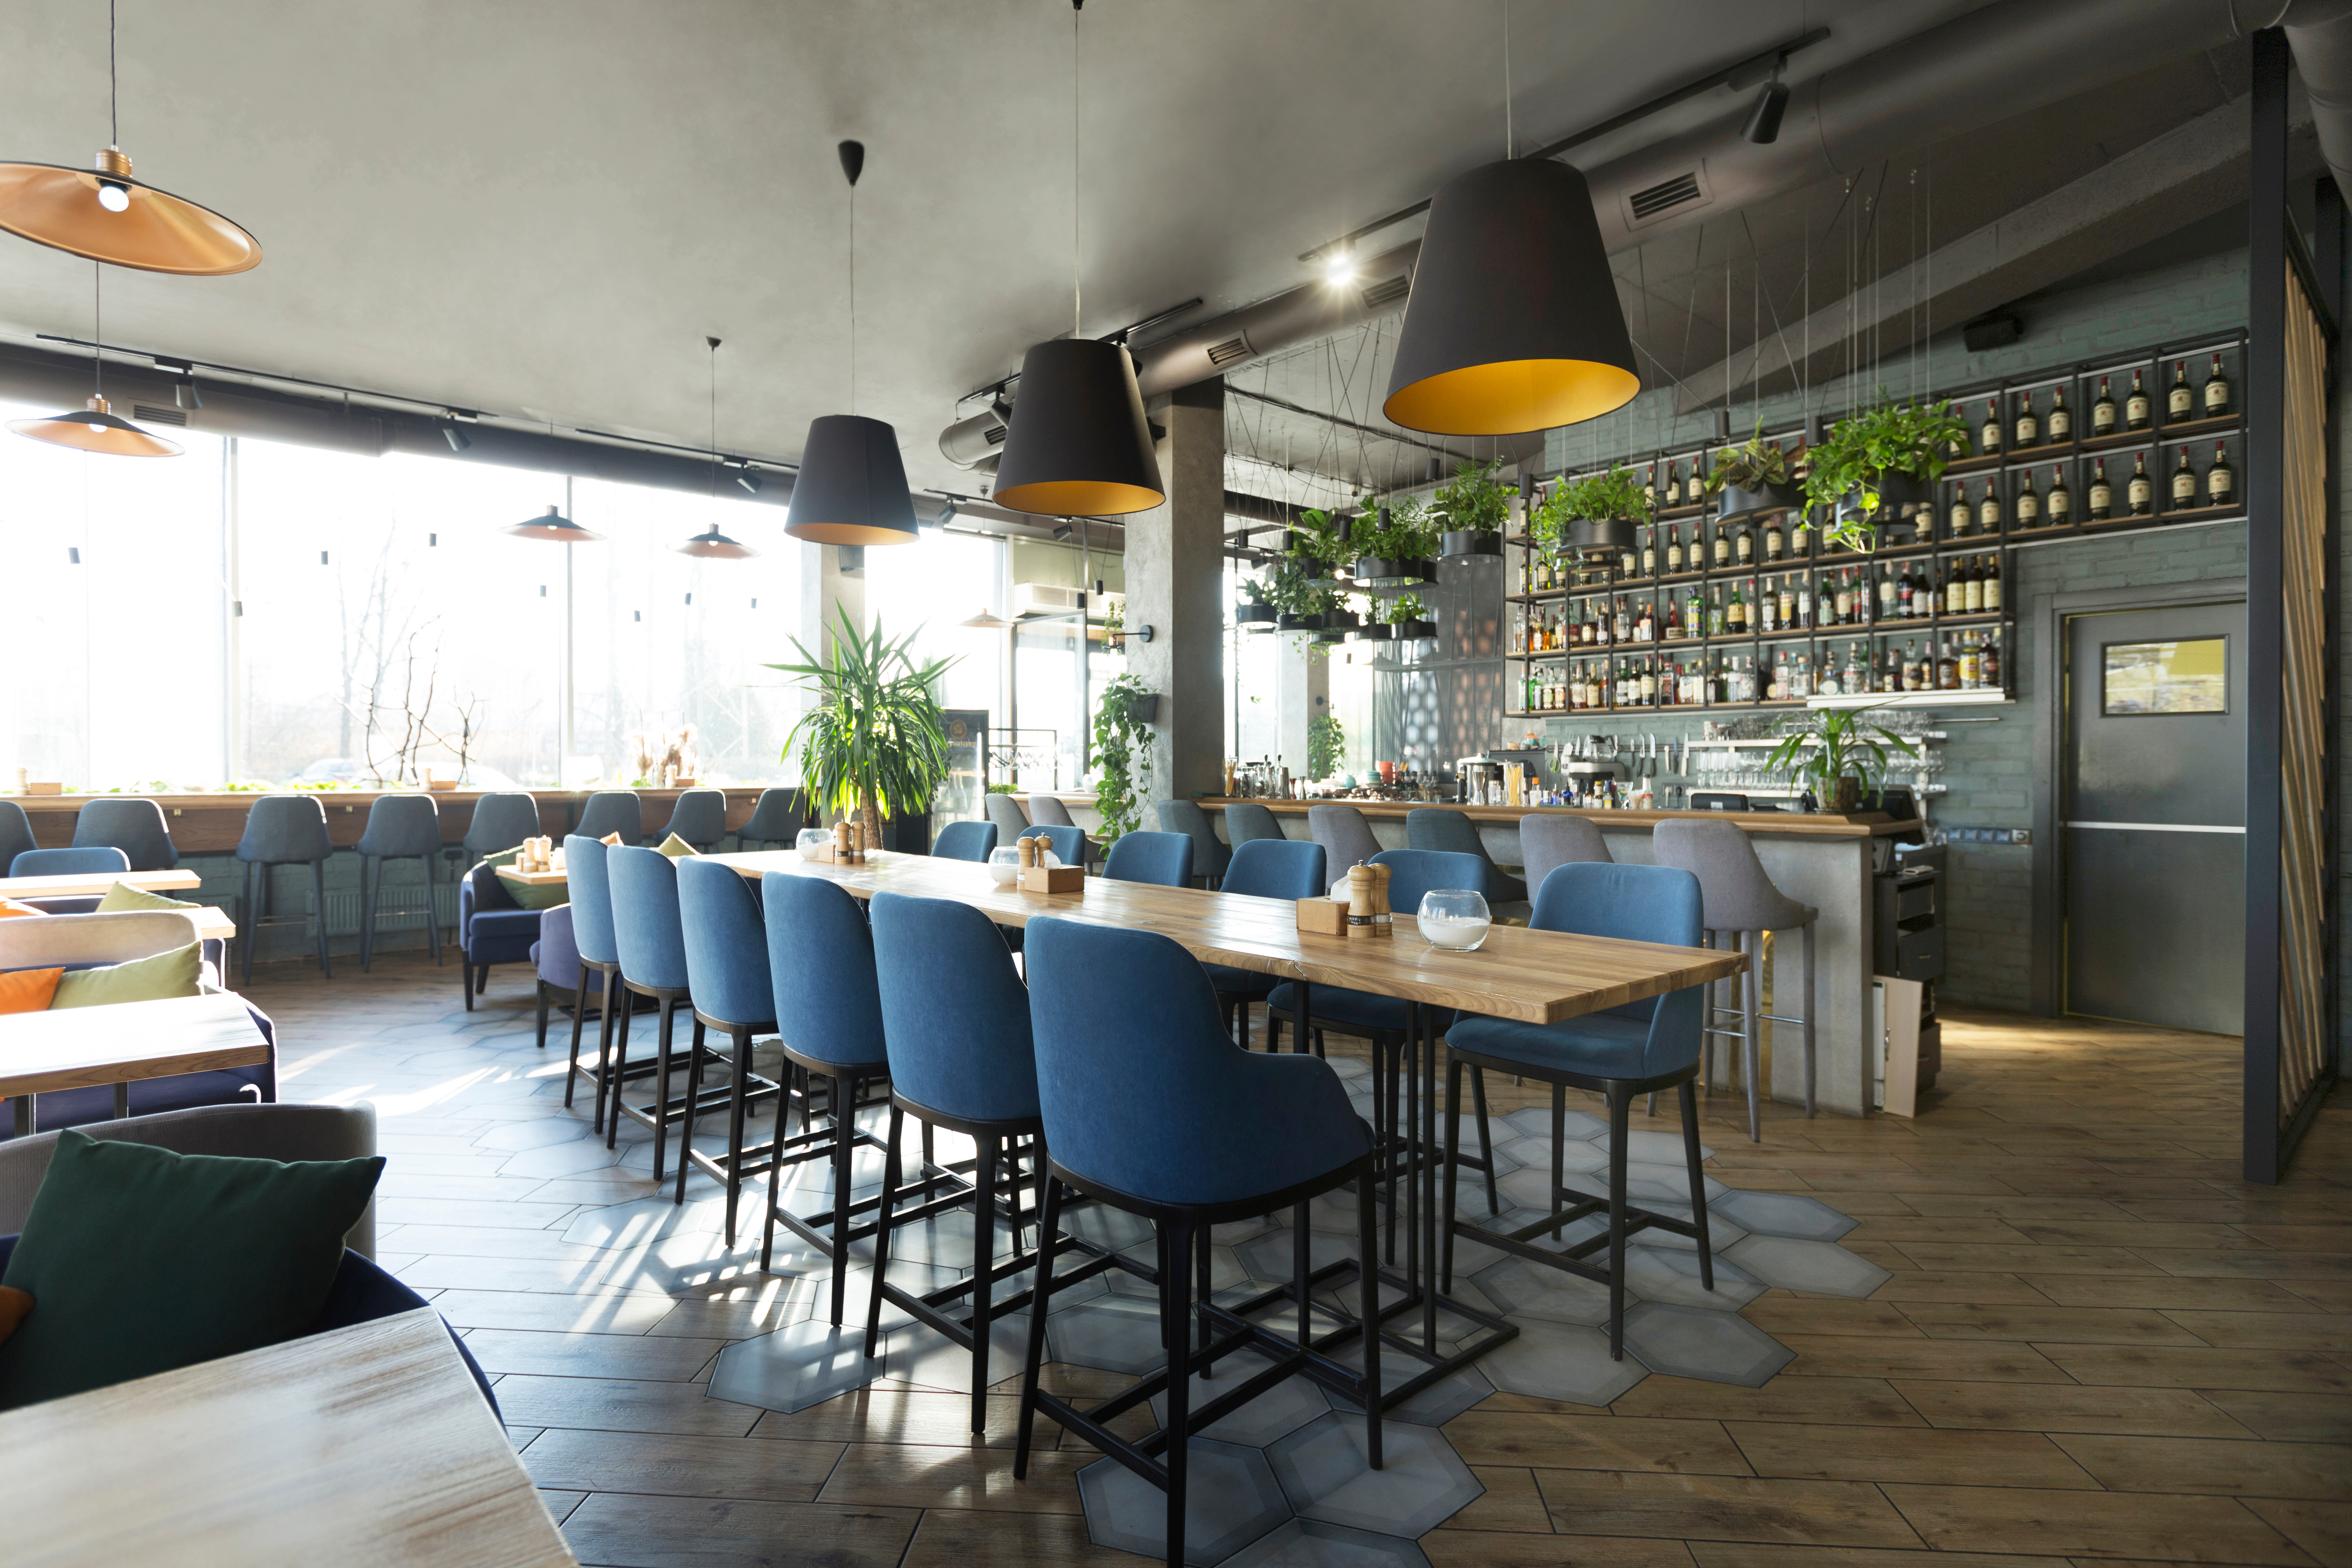 Stylish restaurant interior for dinner and rest. | Source: Shutterstock